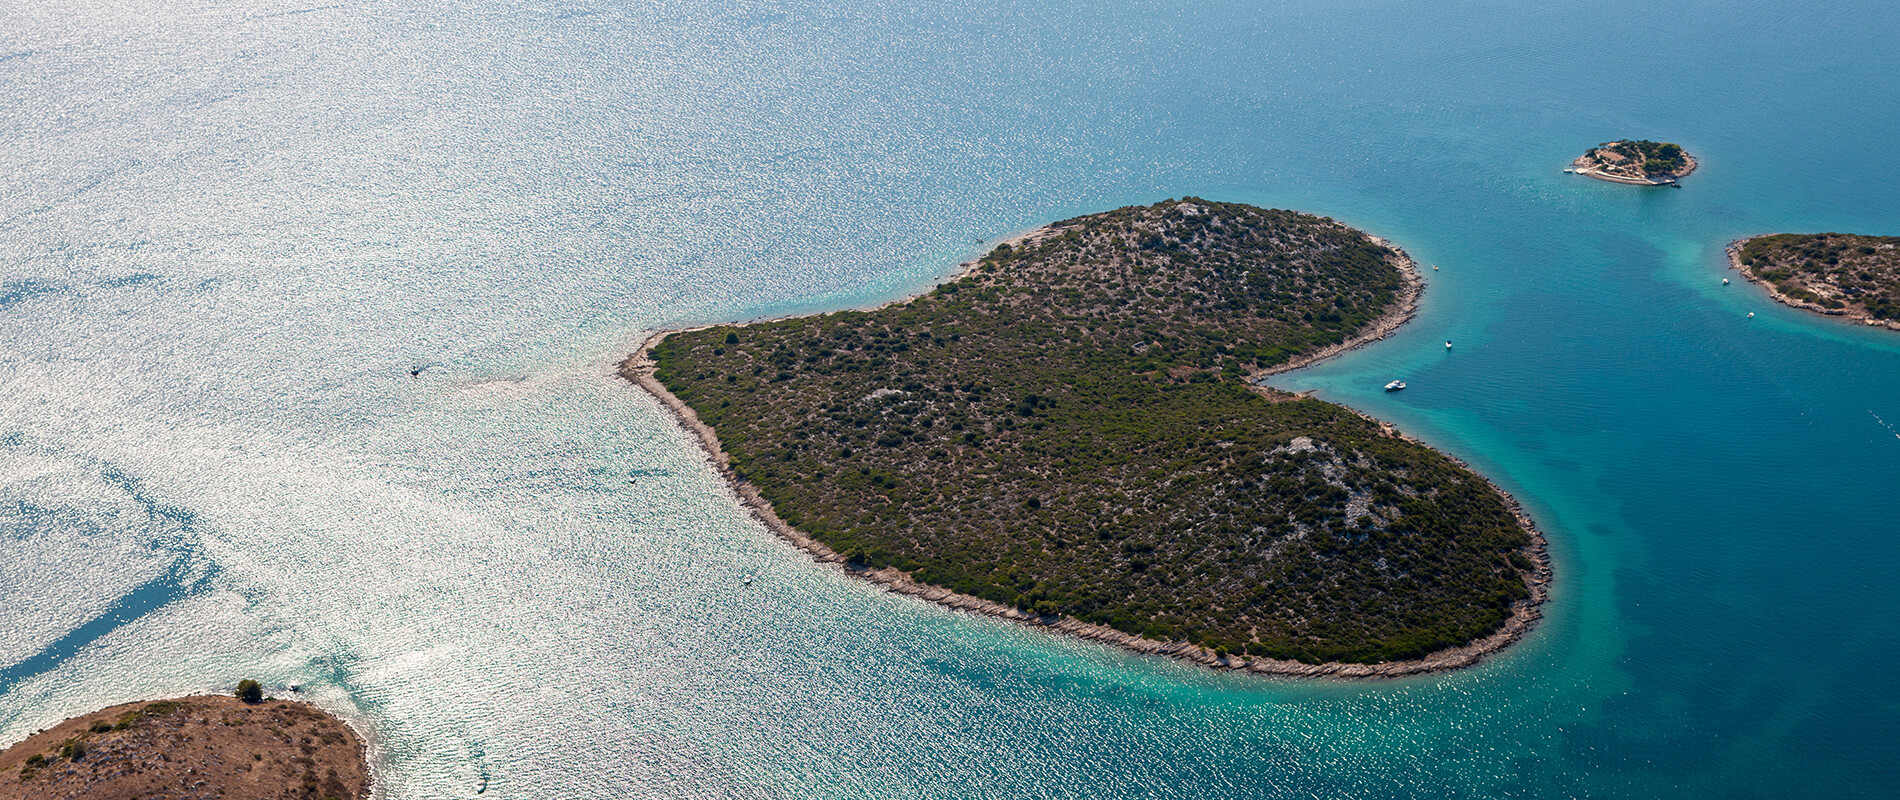 Galesnjak, the heart-shaped Croatian island